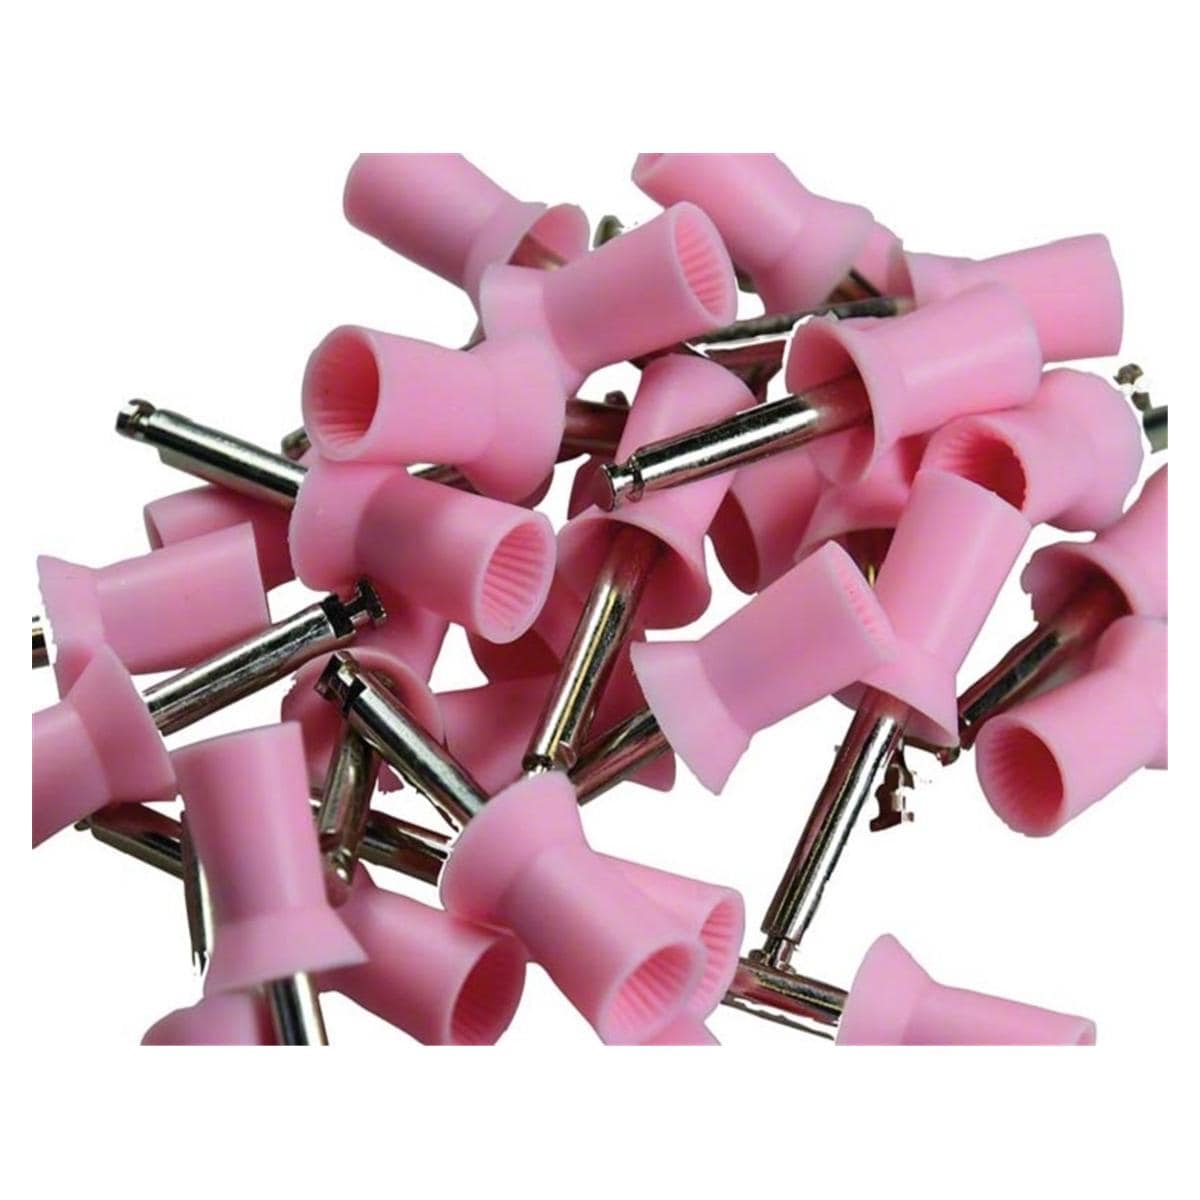 Latch-Type Cups - Gerippt, rosa, weich, 9007/30, Packung 30 Stück